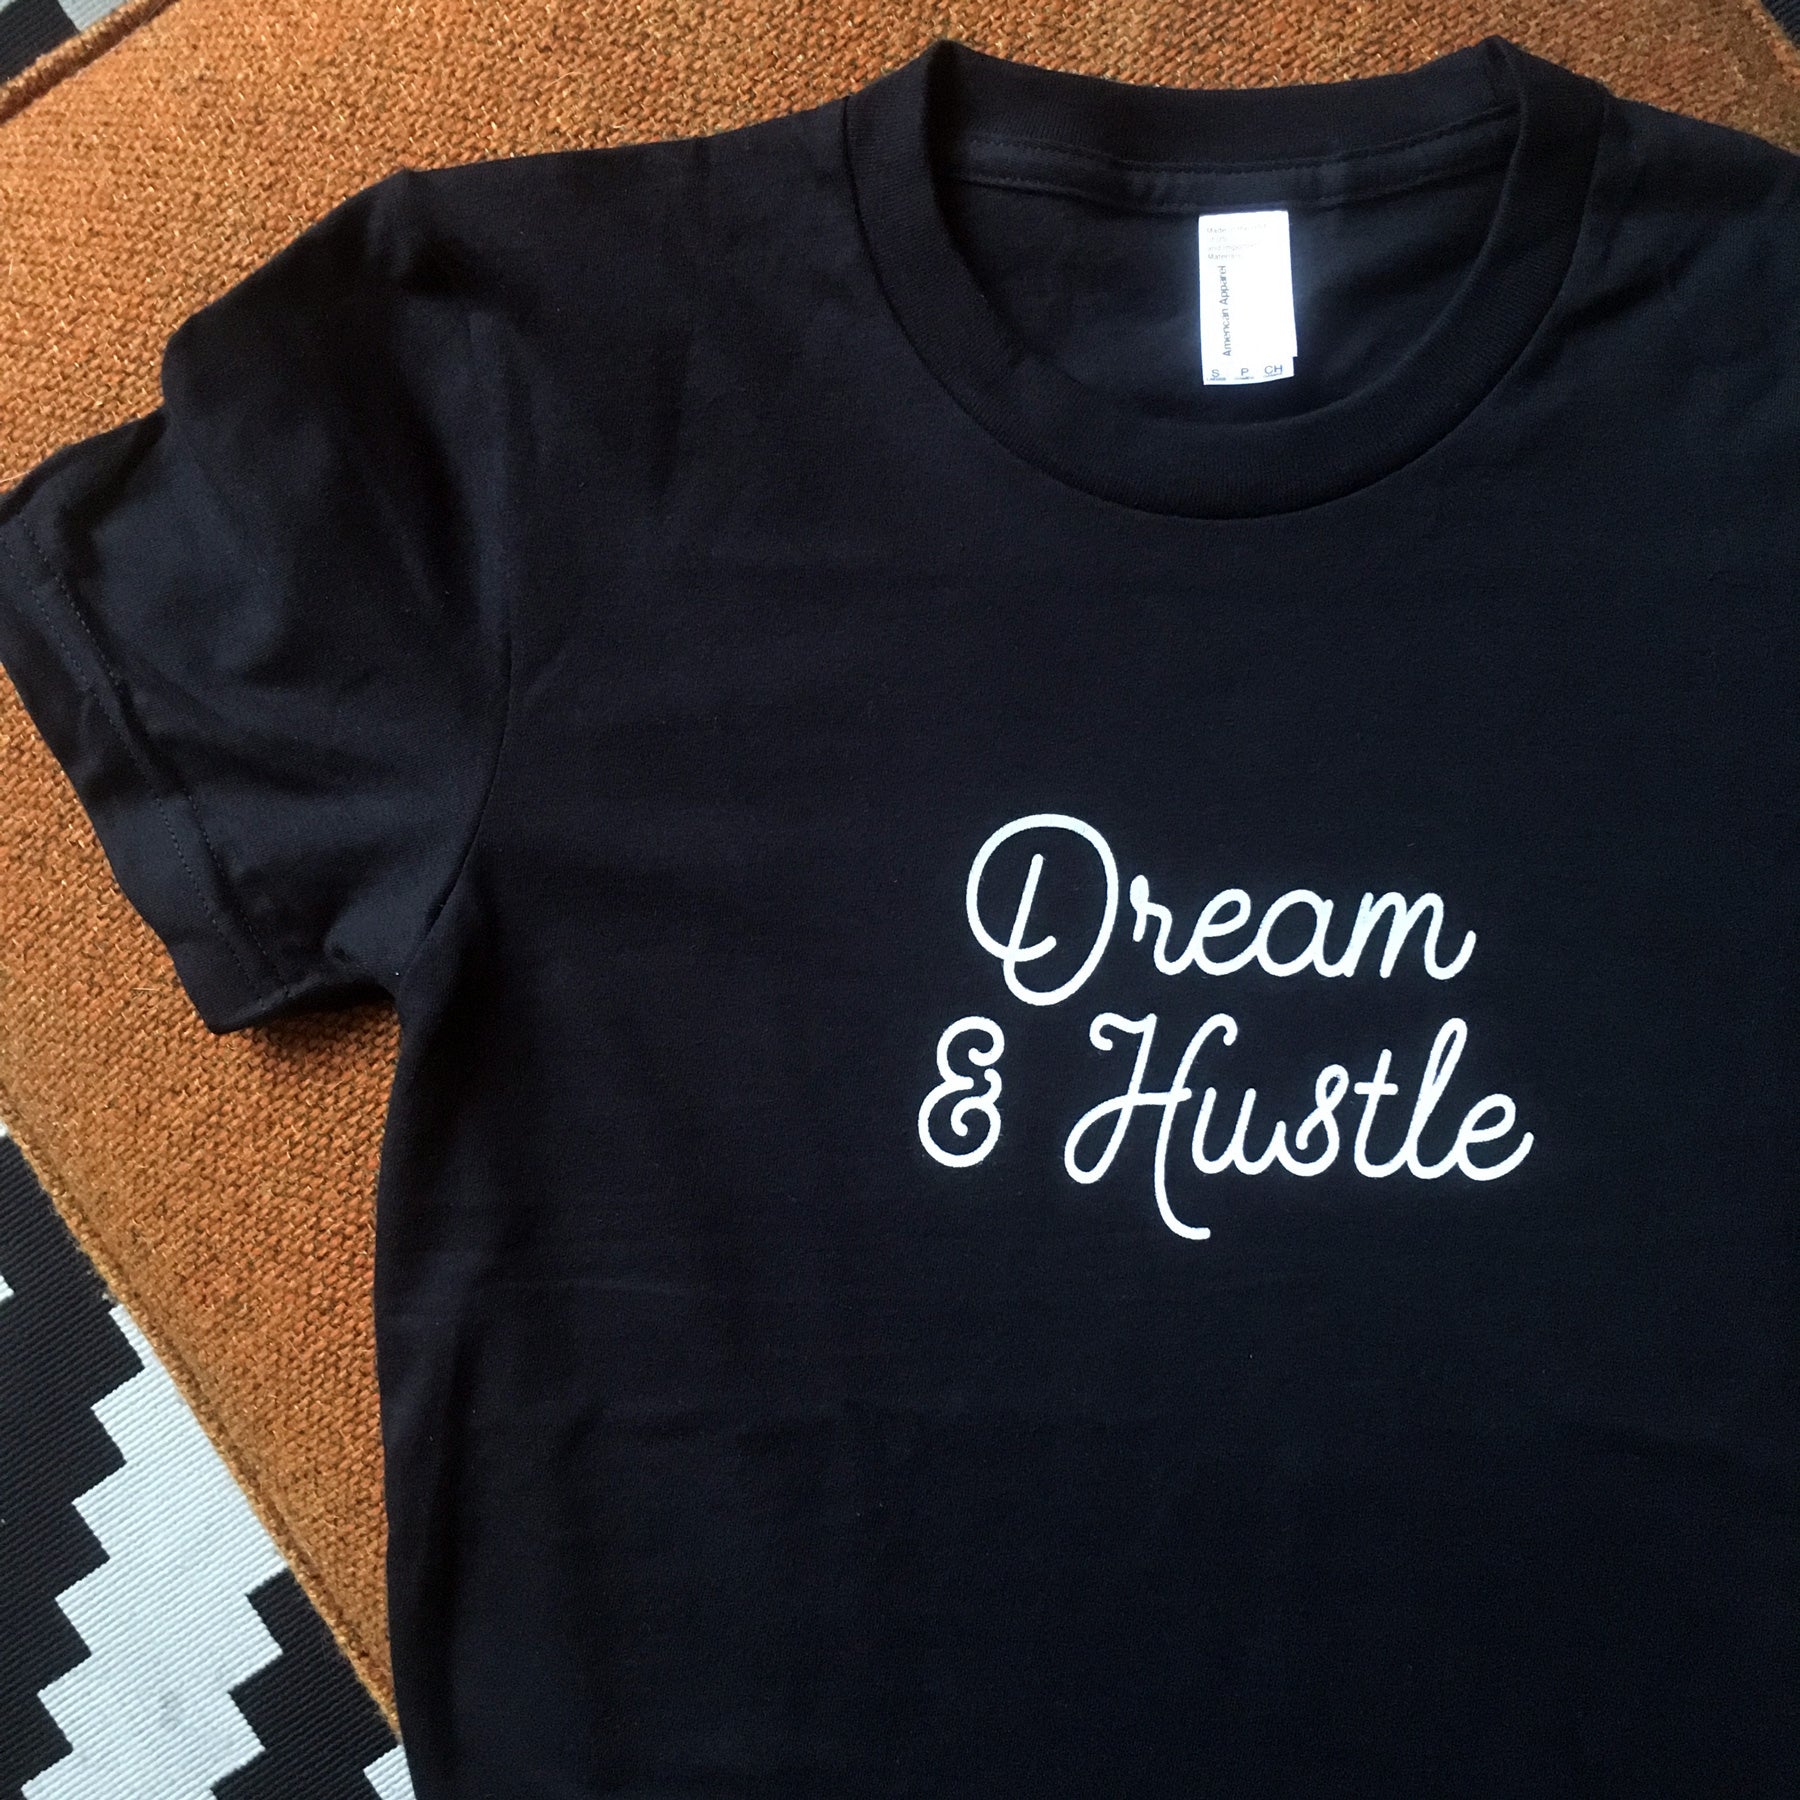 Dream & Hustle Tees